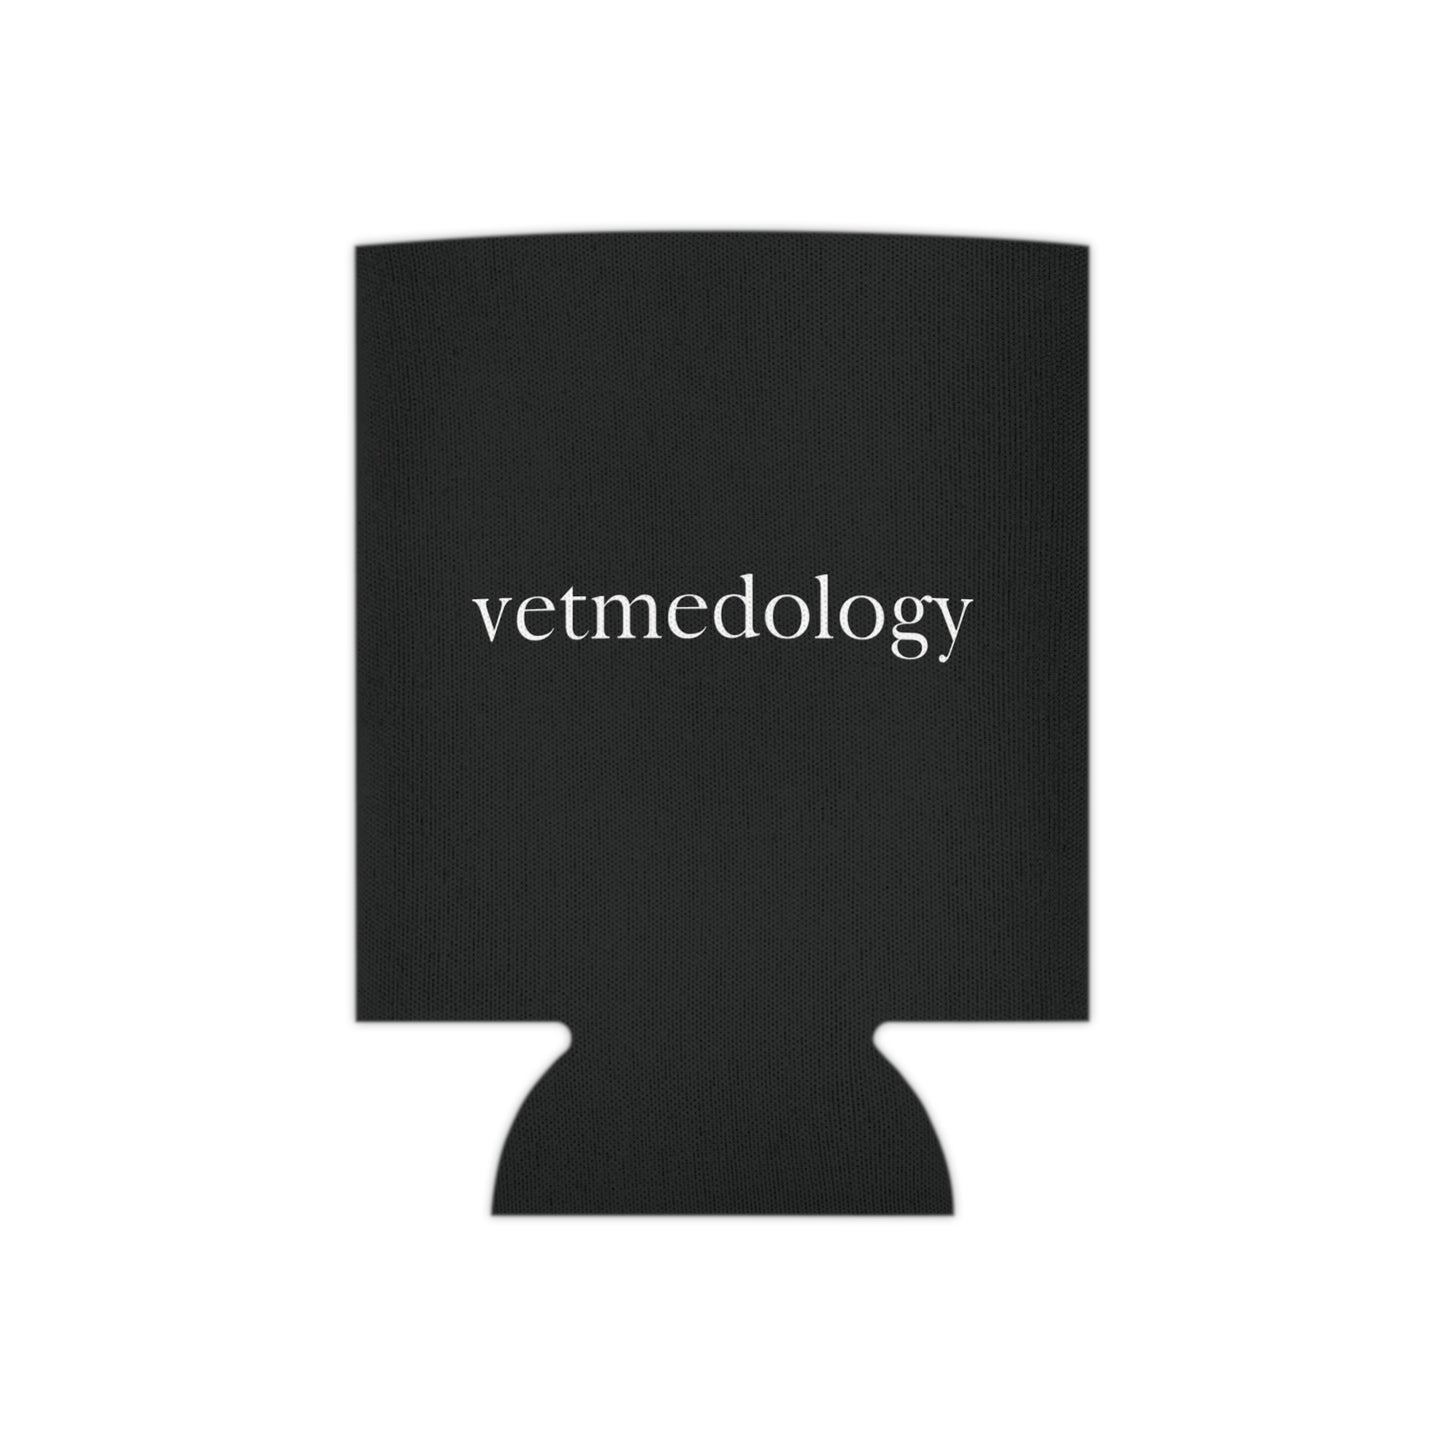 vetmedology Can Cooler